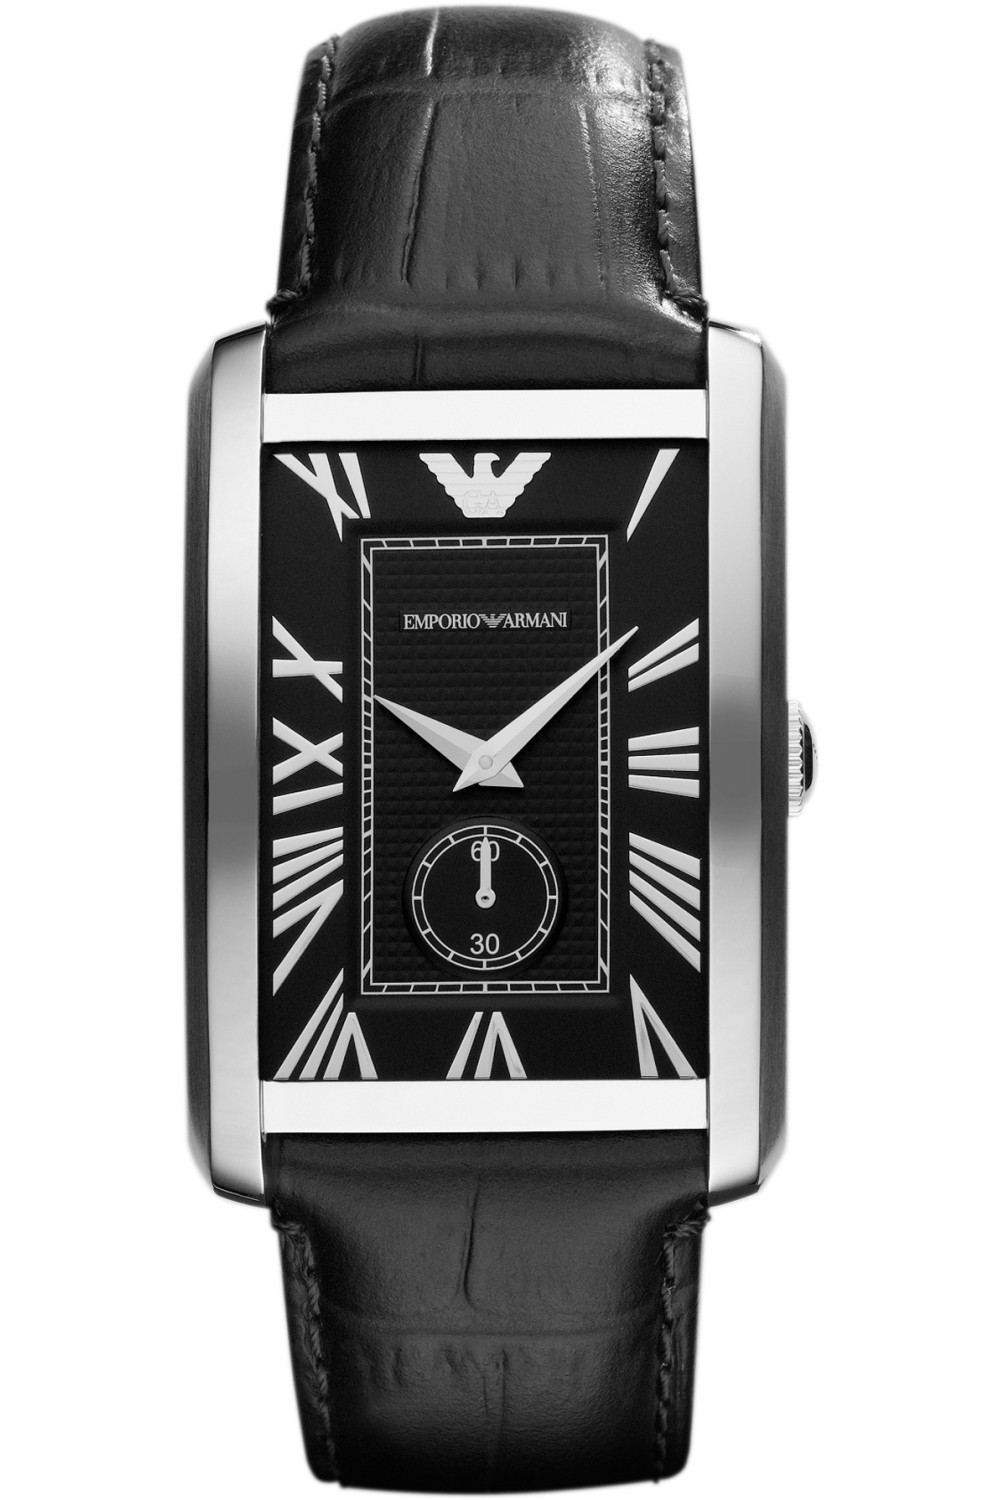 Cheap Armani Watches AR1604 - The Watch Blog